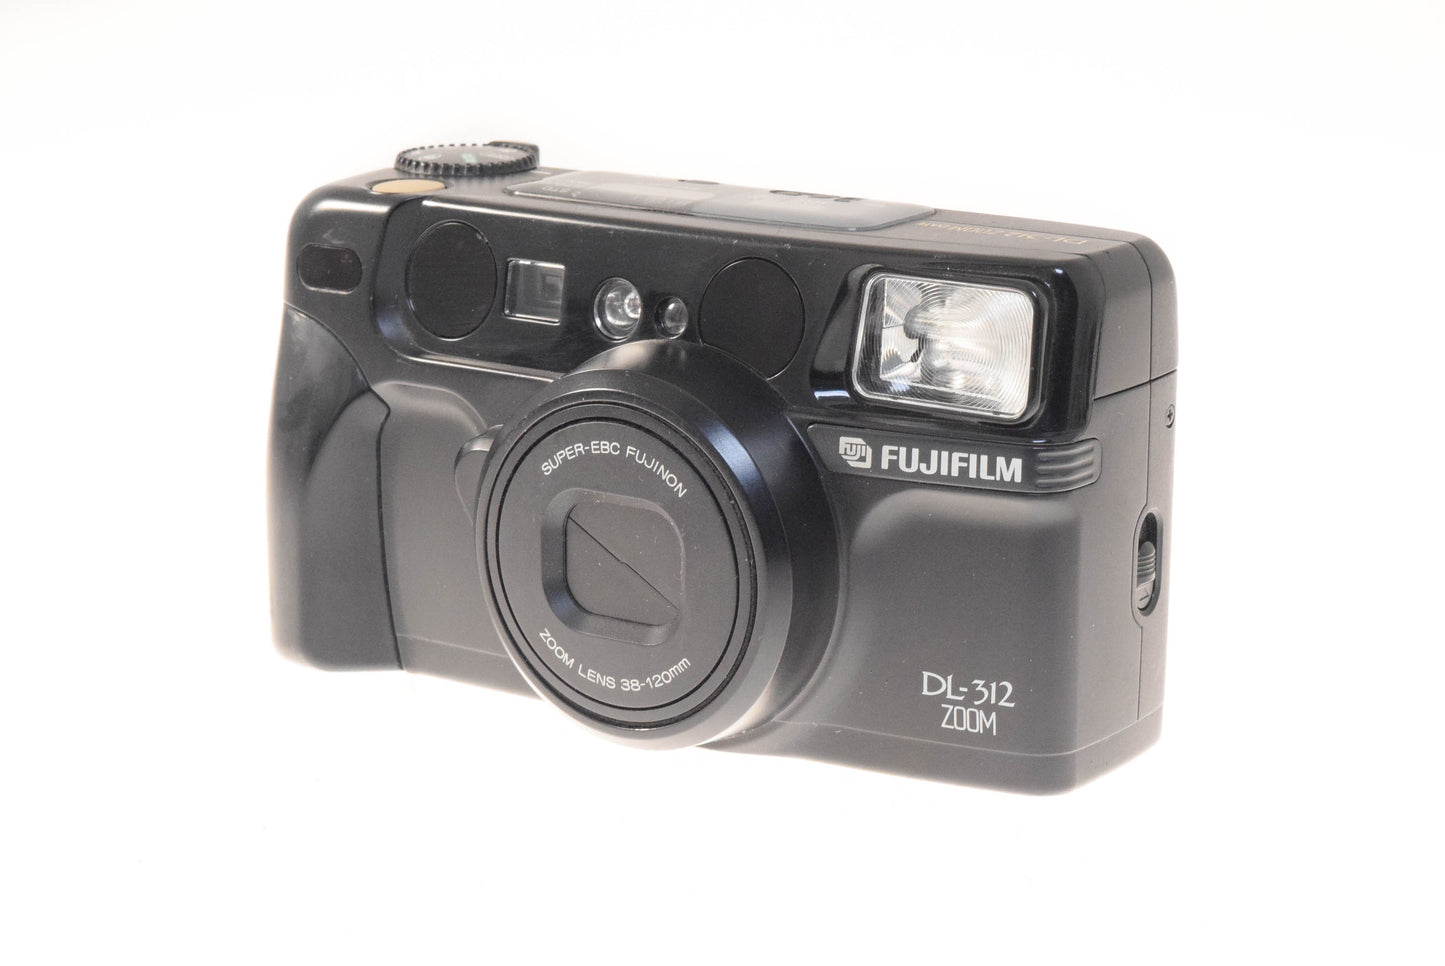 Fujifilm DL-312 Zoom Date - Camera